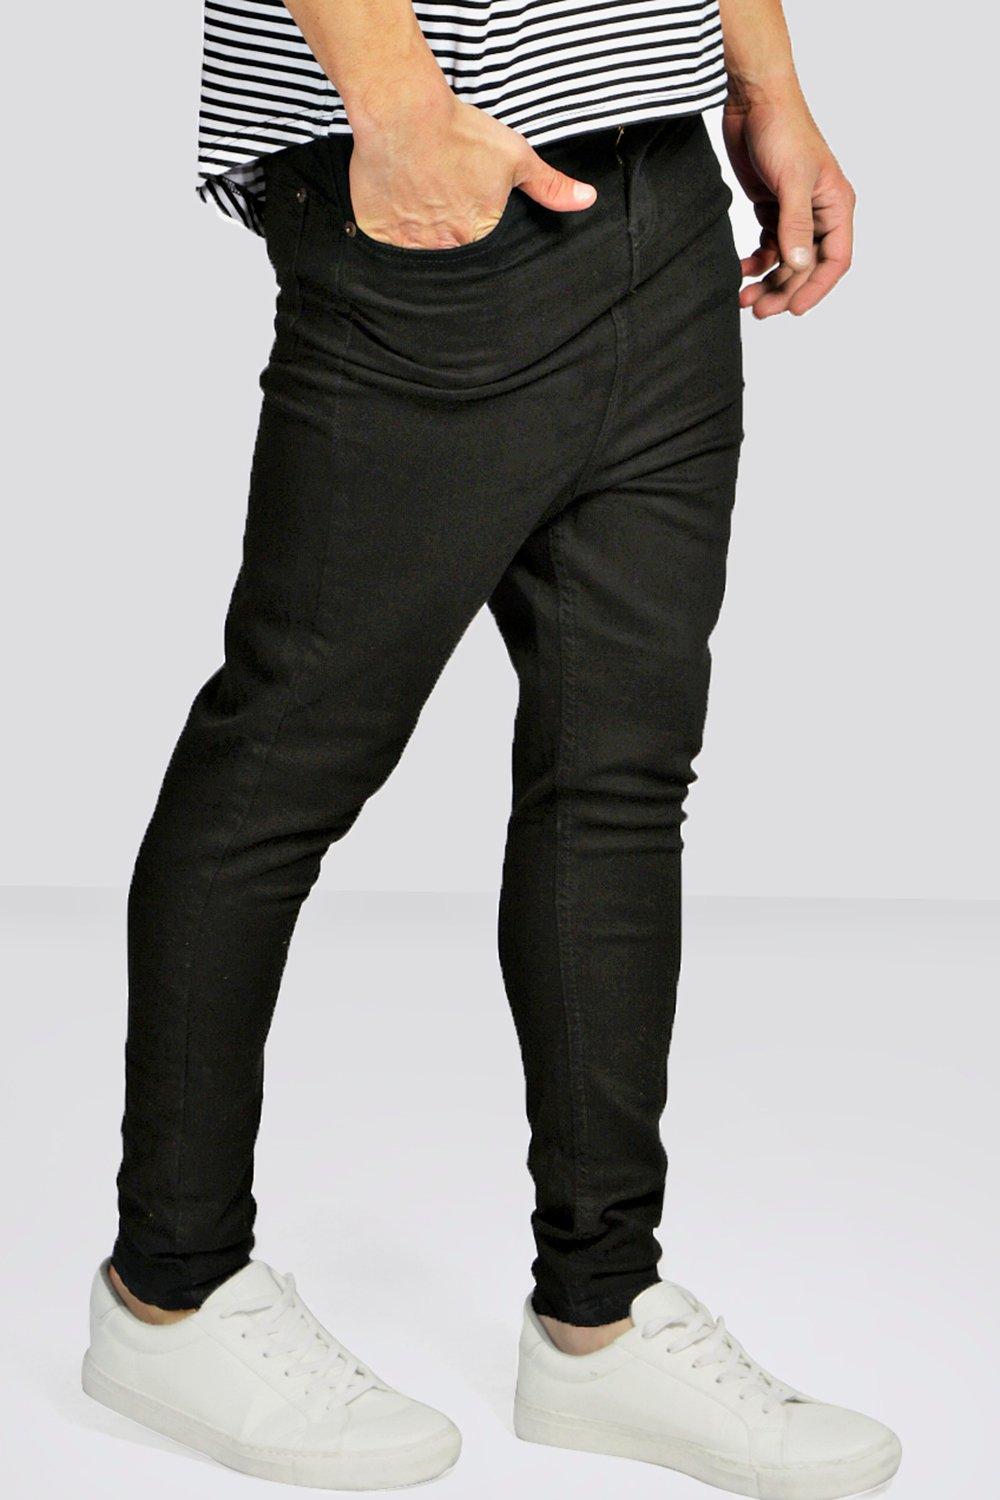 Boohoo Mens Drop Crotch Skinny Black Jeans | eBay